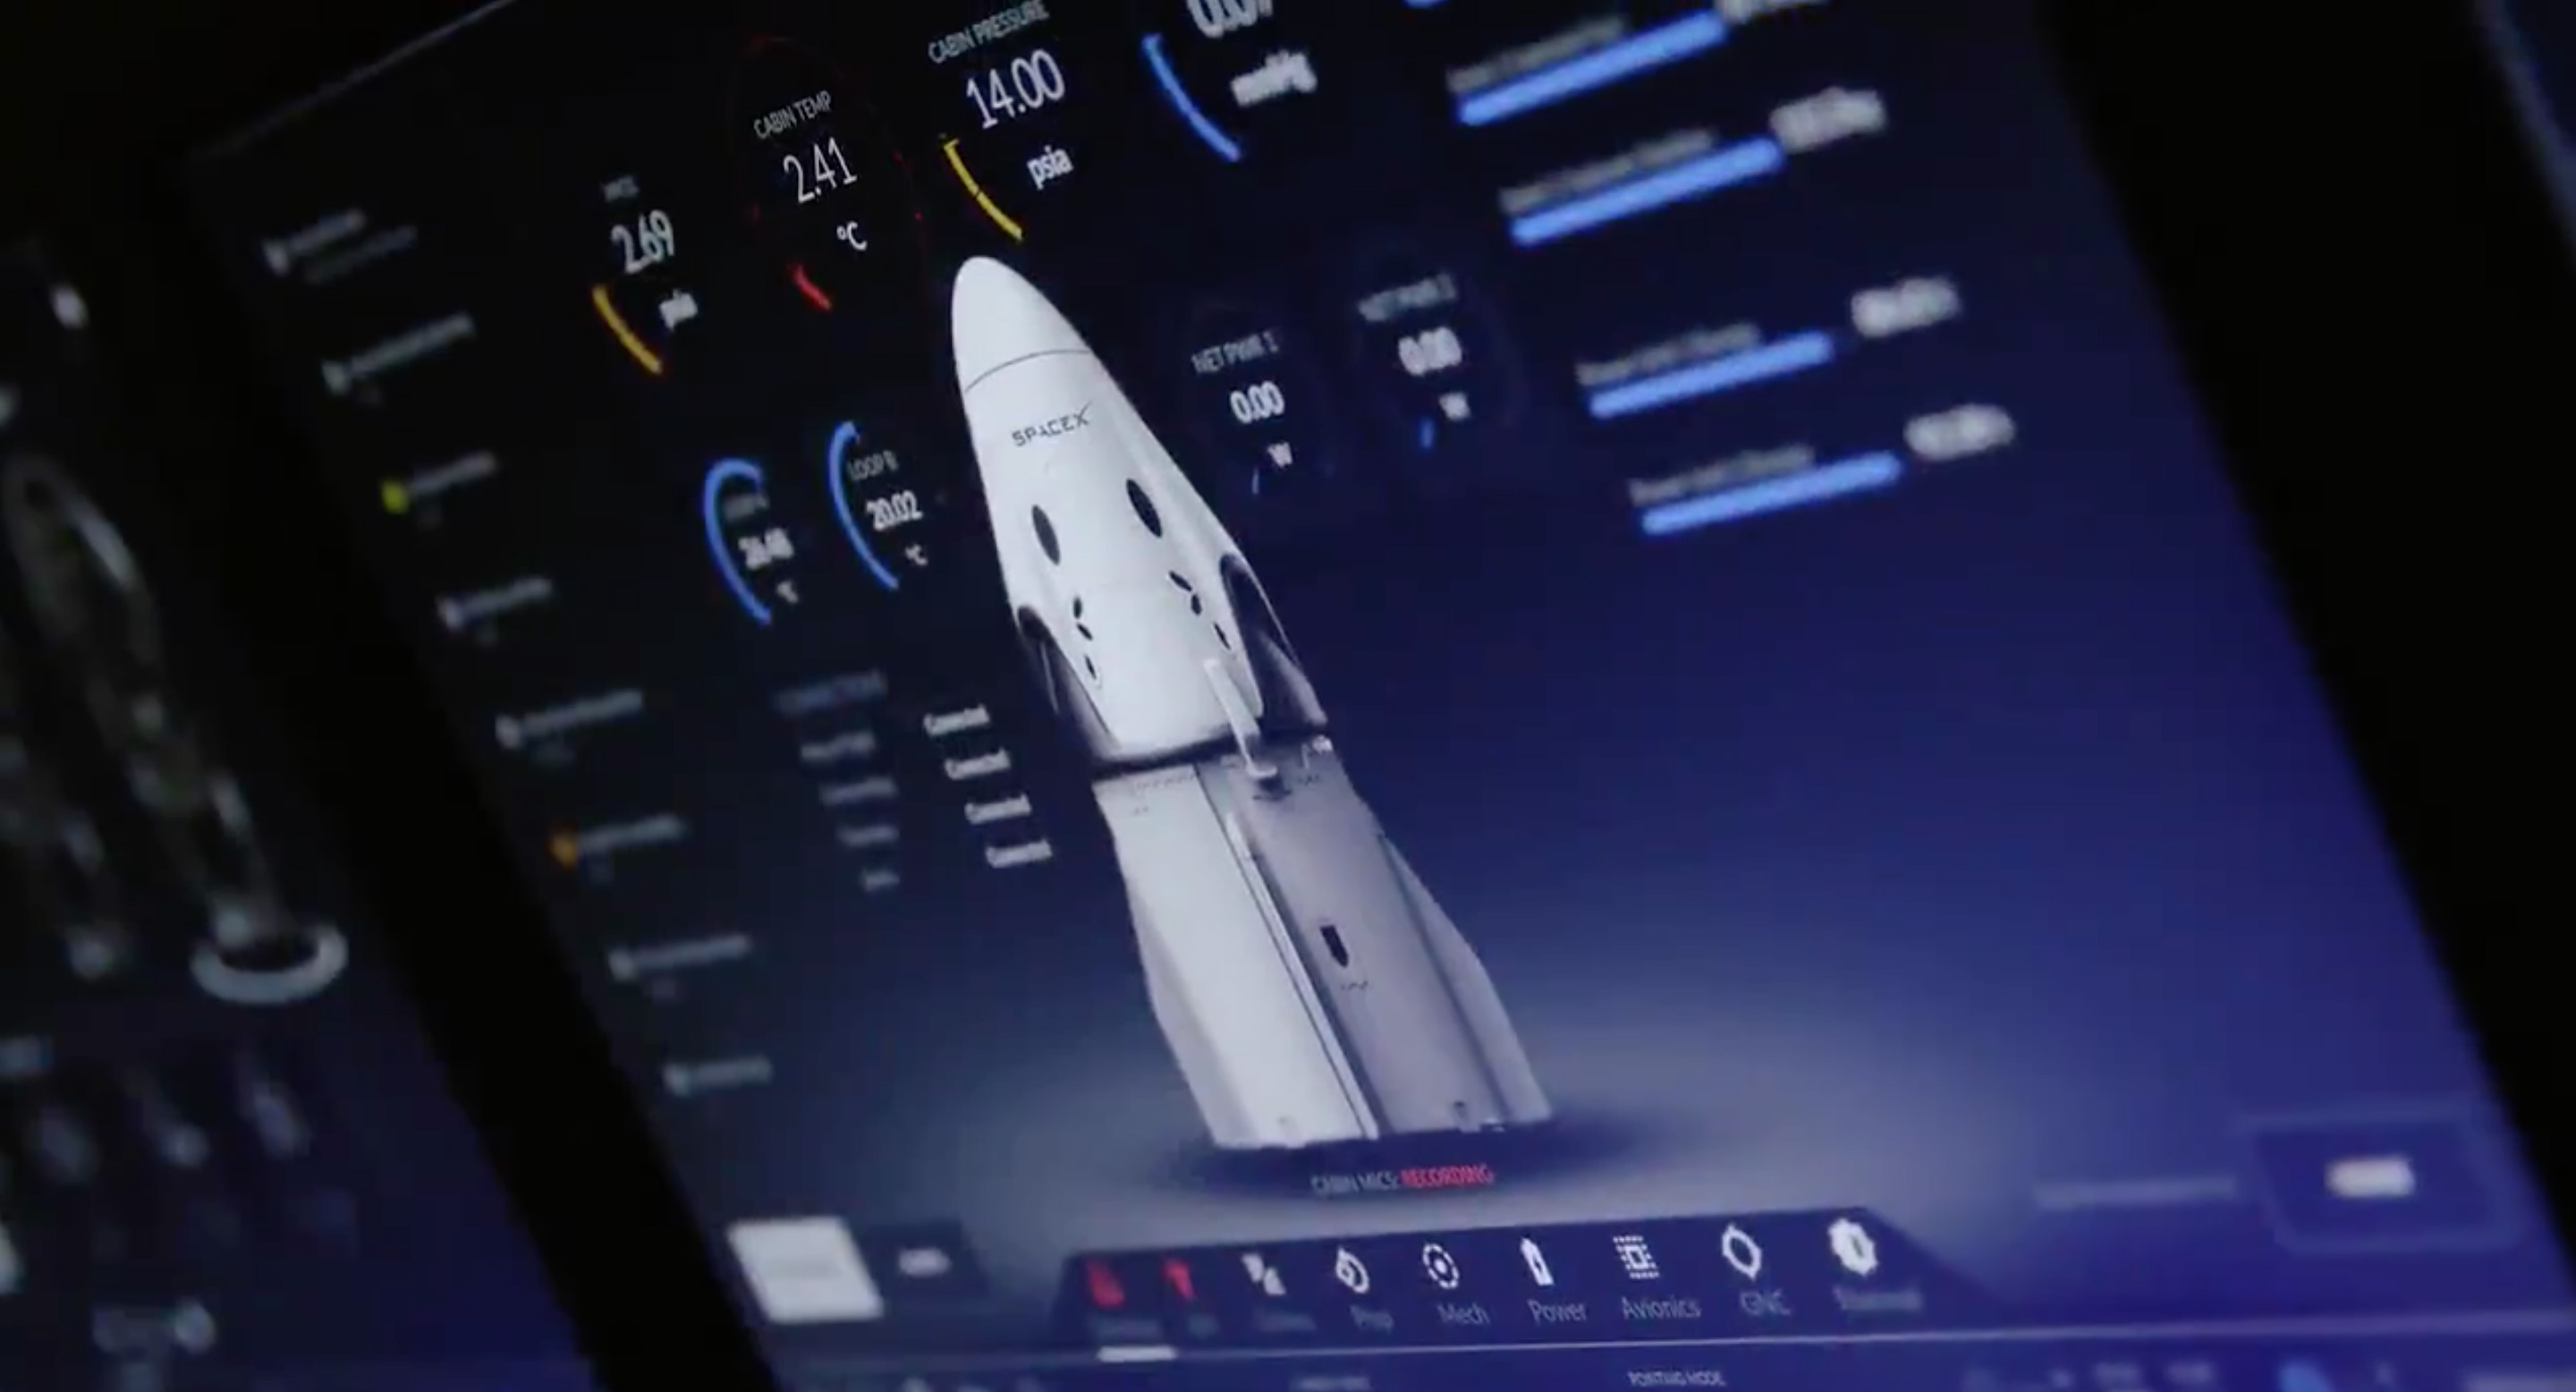 SpaceX - Crew Dragon Displays UI/UX